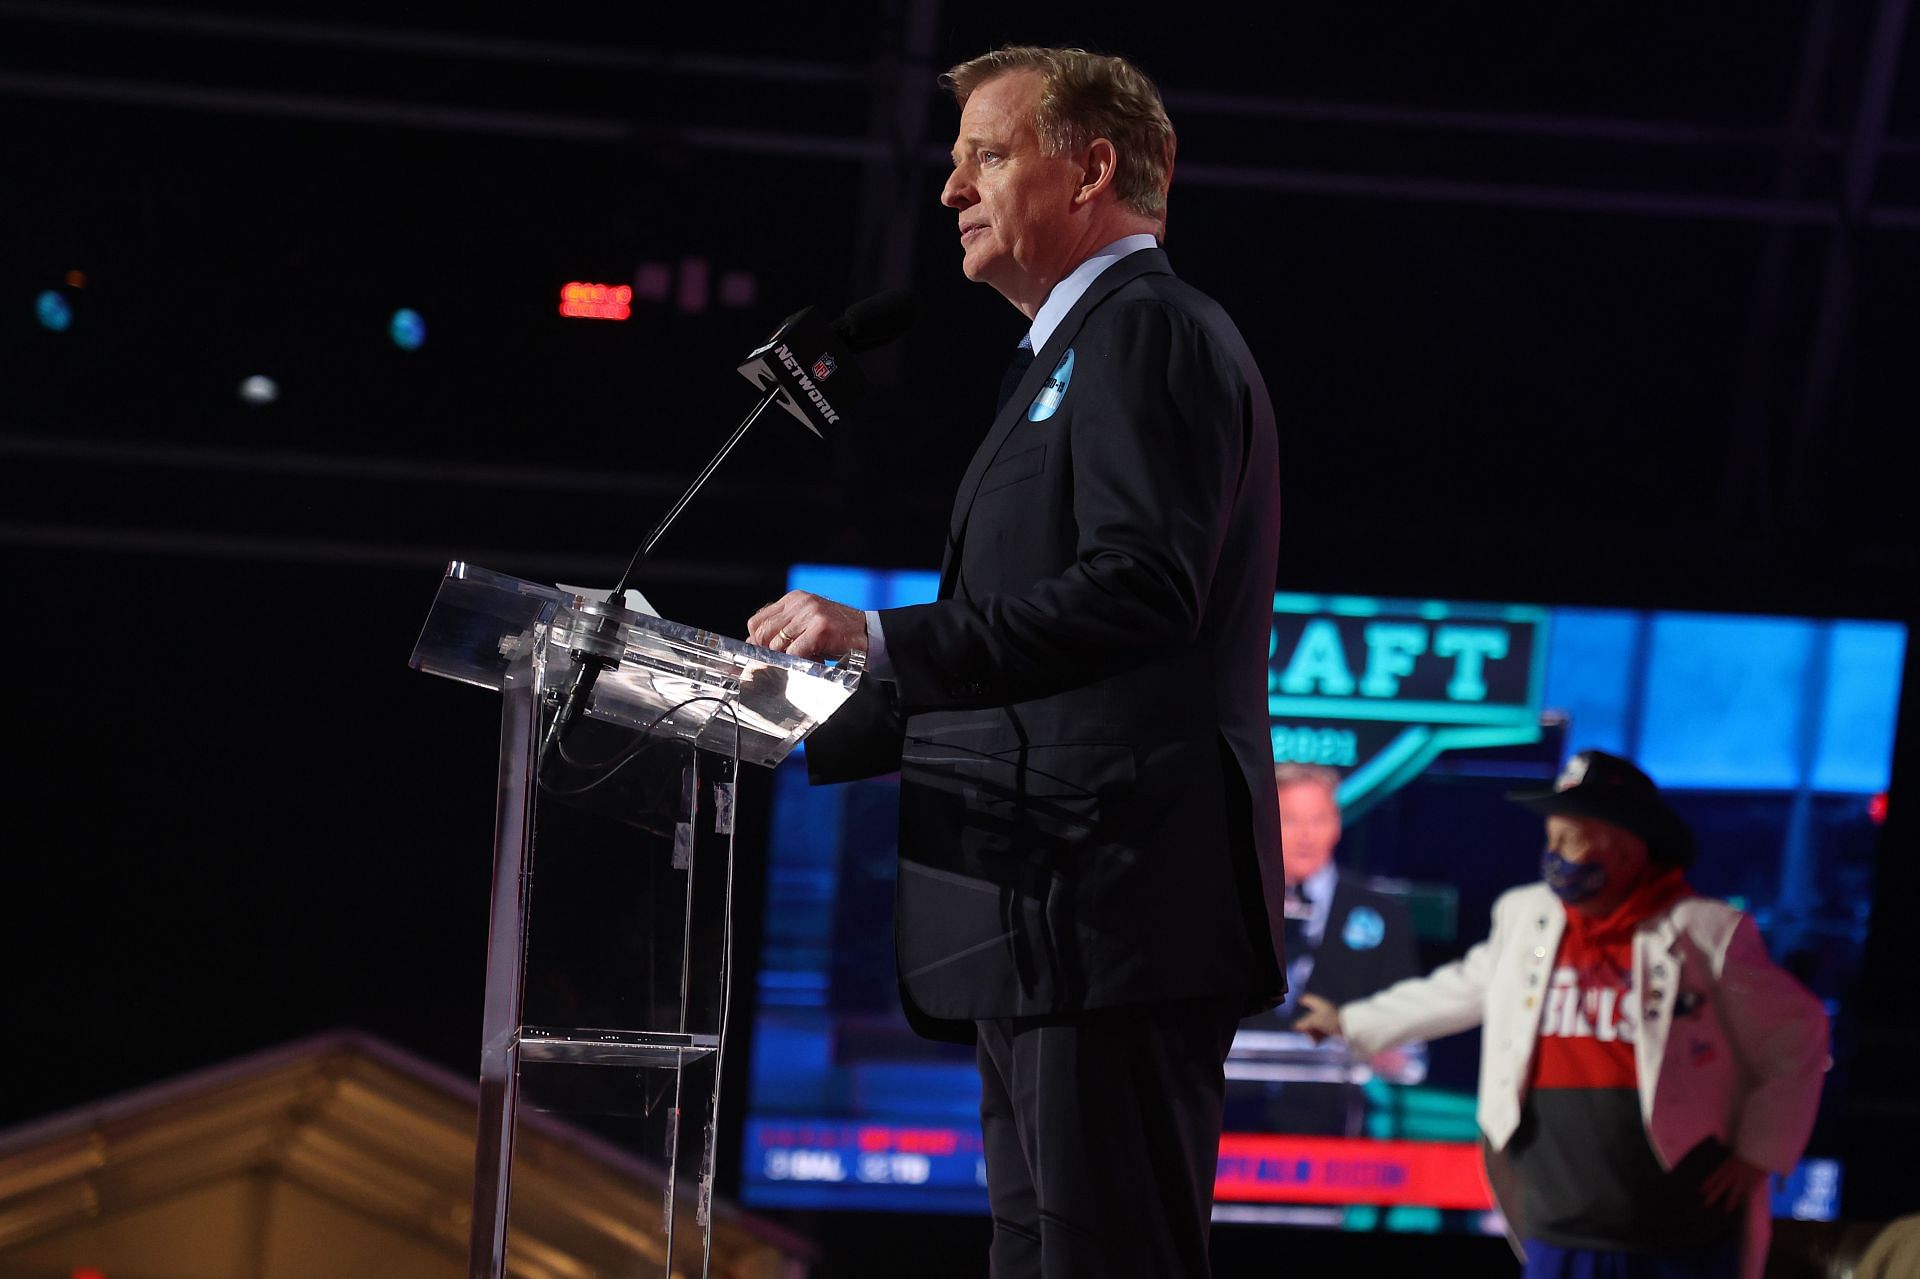 2021 NFL Draft: NFL Commissioner Roger Goodell